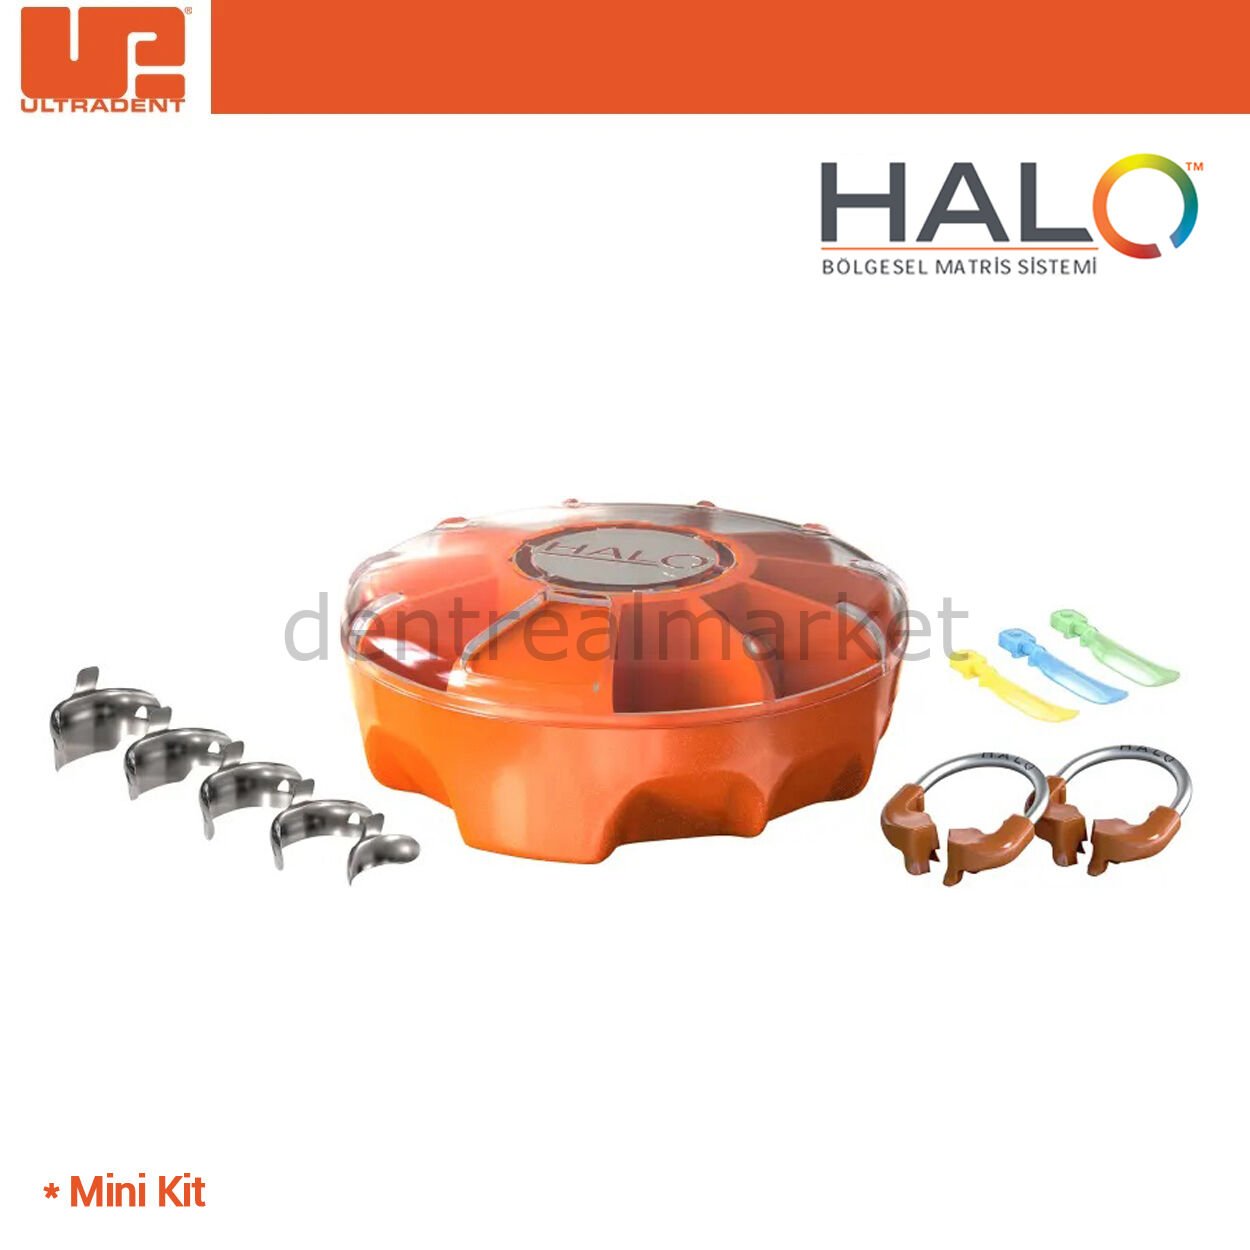 HALO Bölgesel Matris Sistemi - Mini Kit